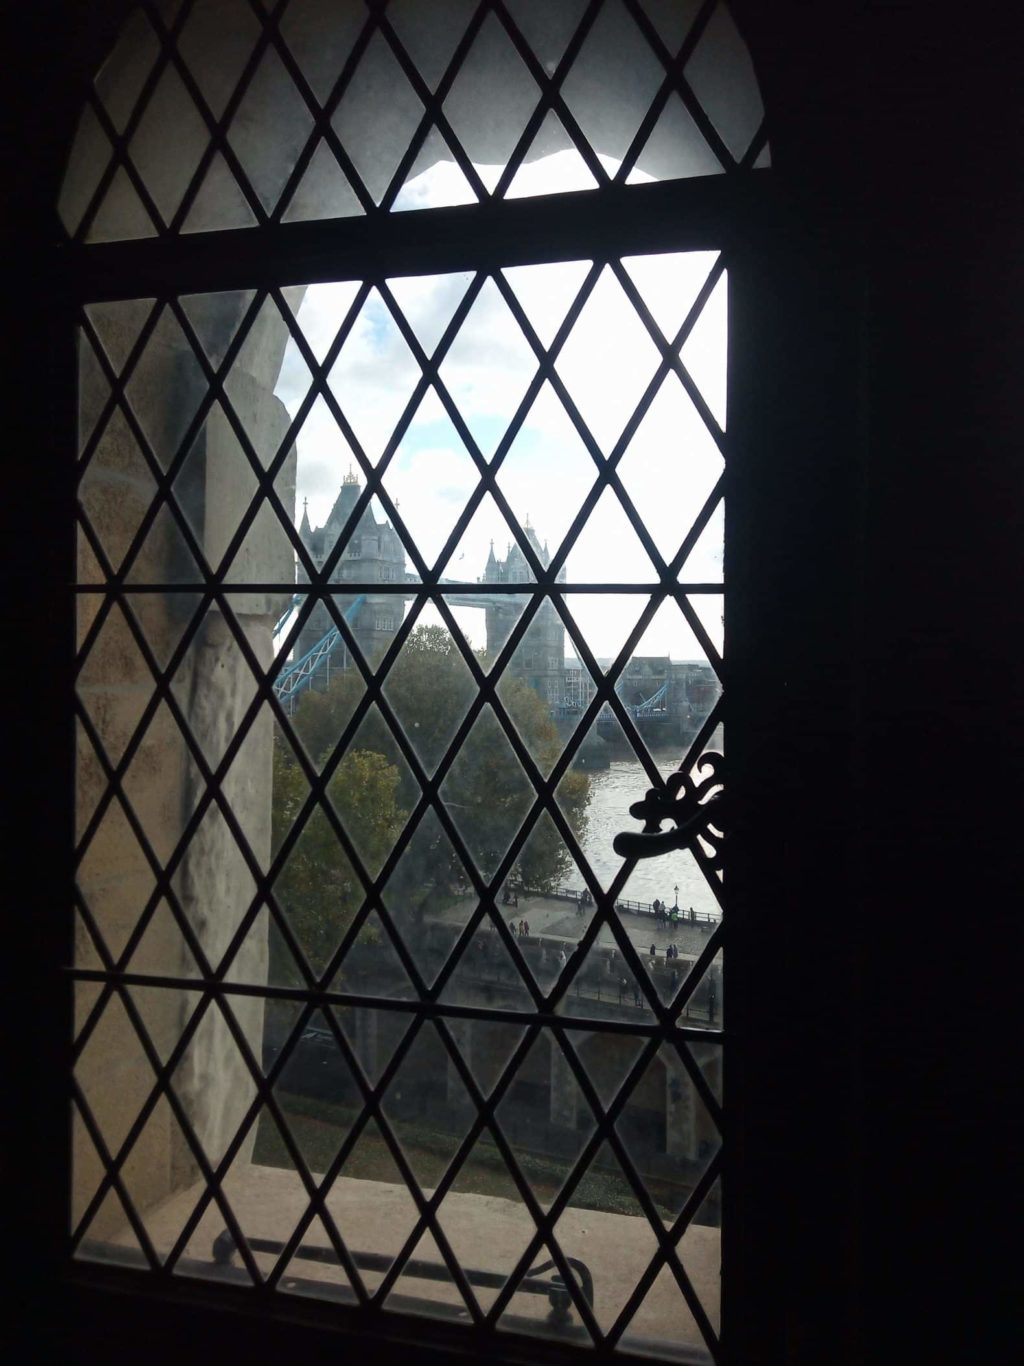 Viewing Tower Bridge through the windows